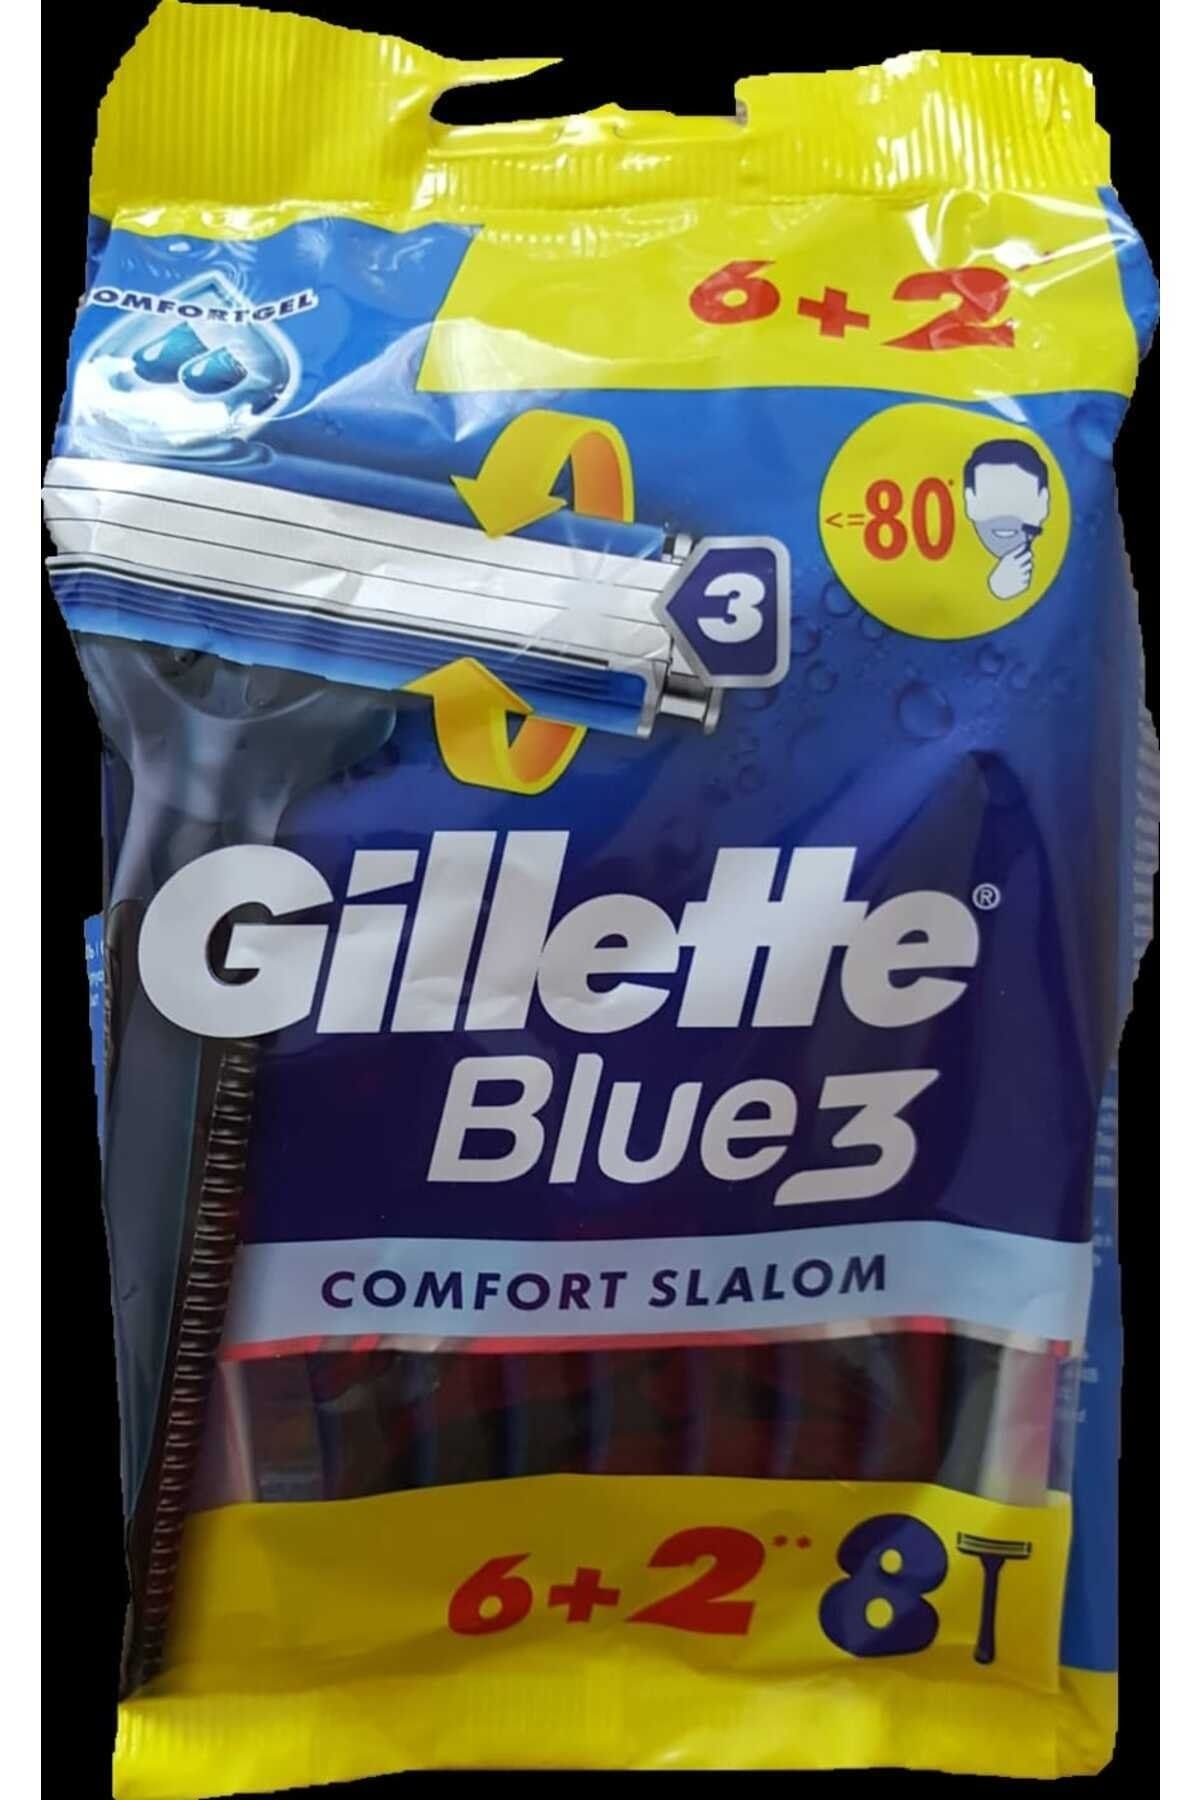 Gillette Blue3 Comfort Slalom Kullan At Tıraş Bıçağı 8'li / 2 ADET